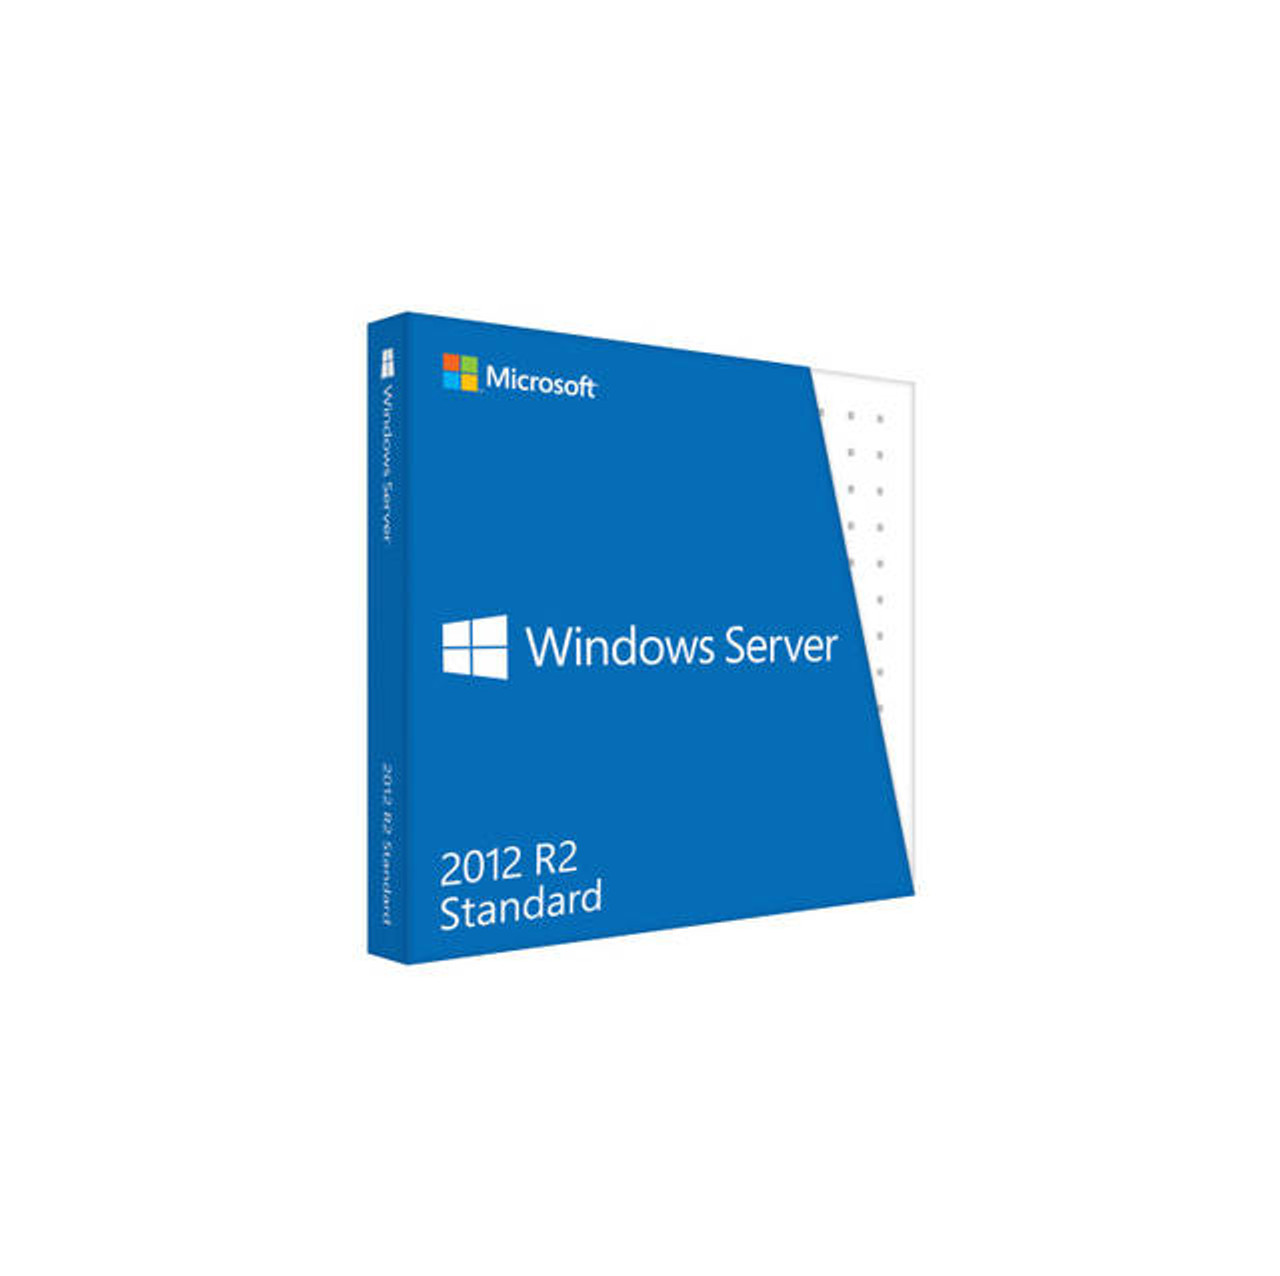 Microsoft Windows Server 2012 R2 Standard Operating System 64-bit English (1 Pack, 2CPU)